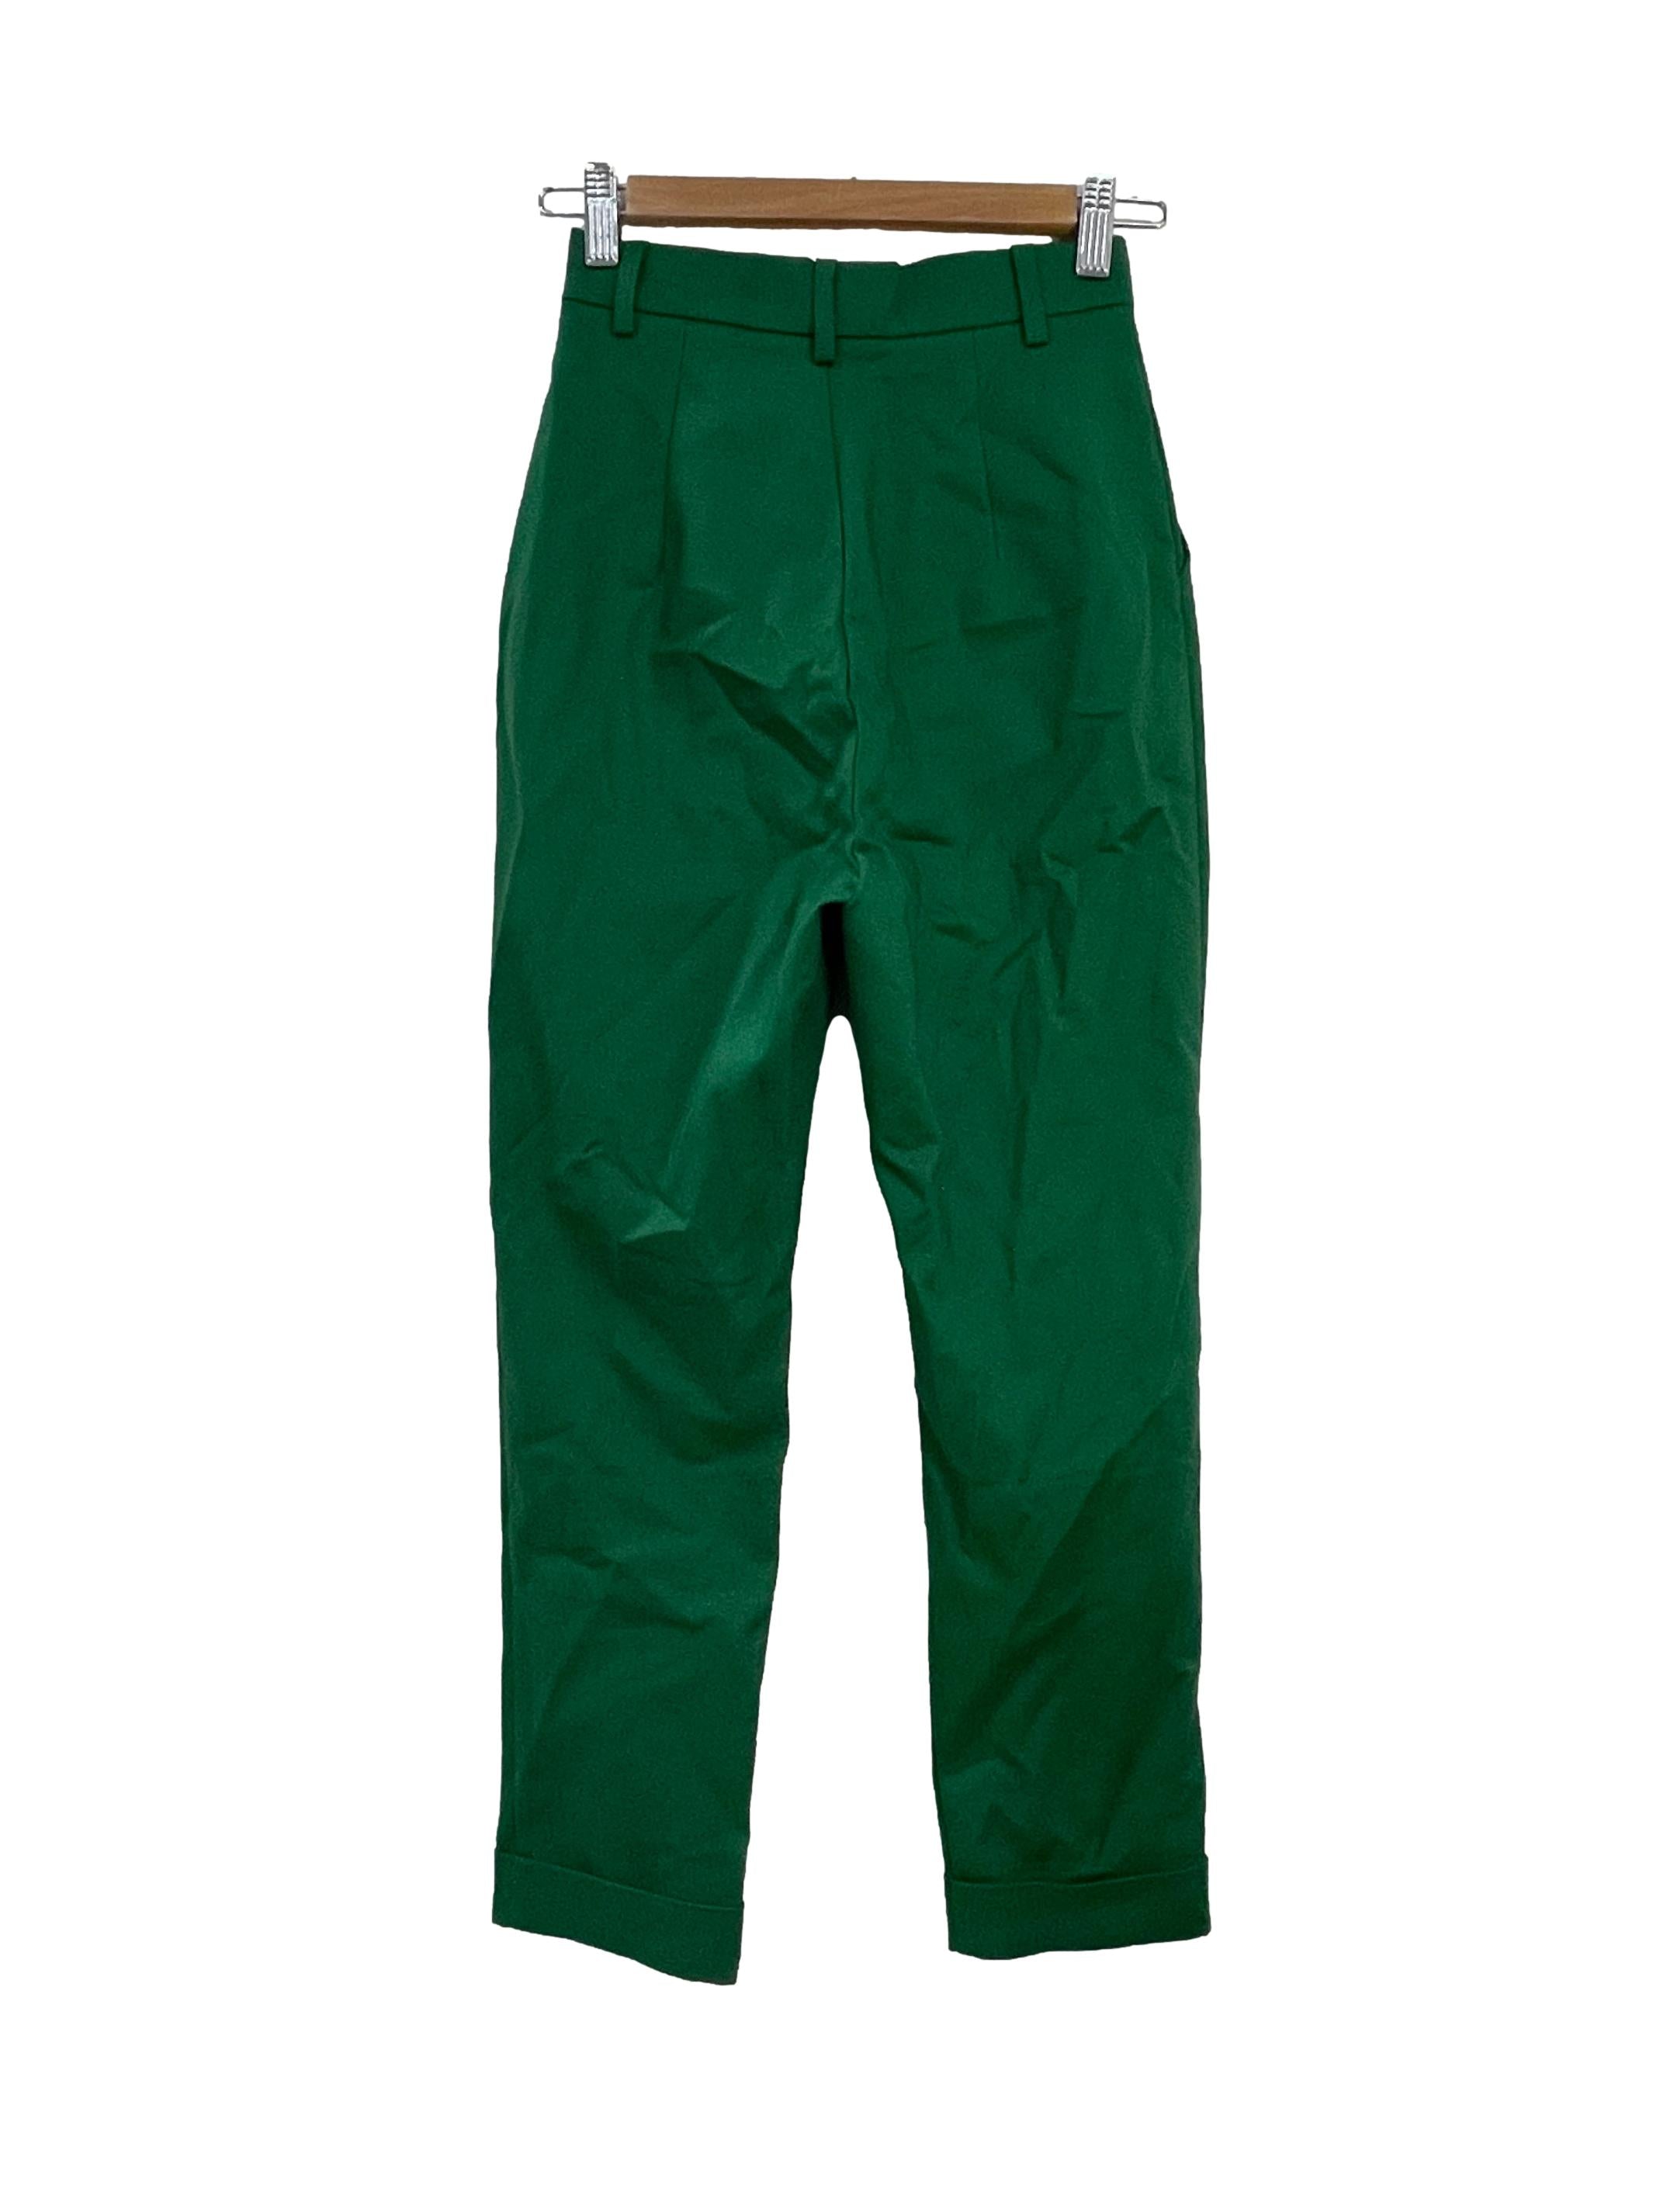 Green High Waist Tapered Cuffed Pants LB